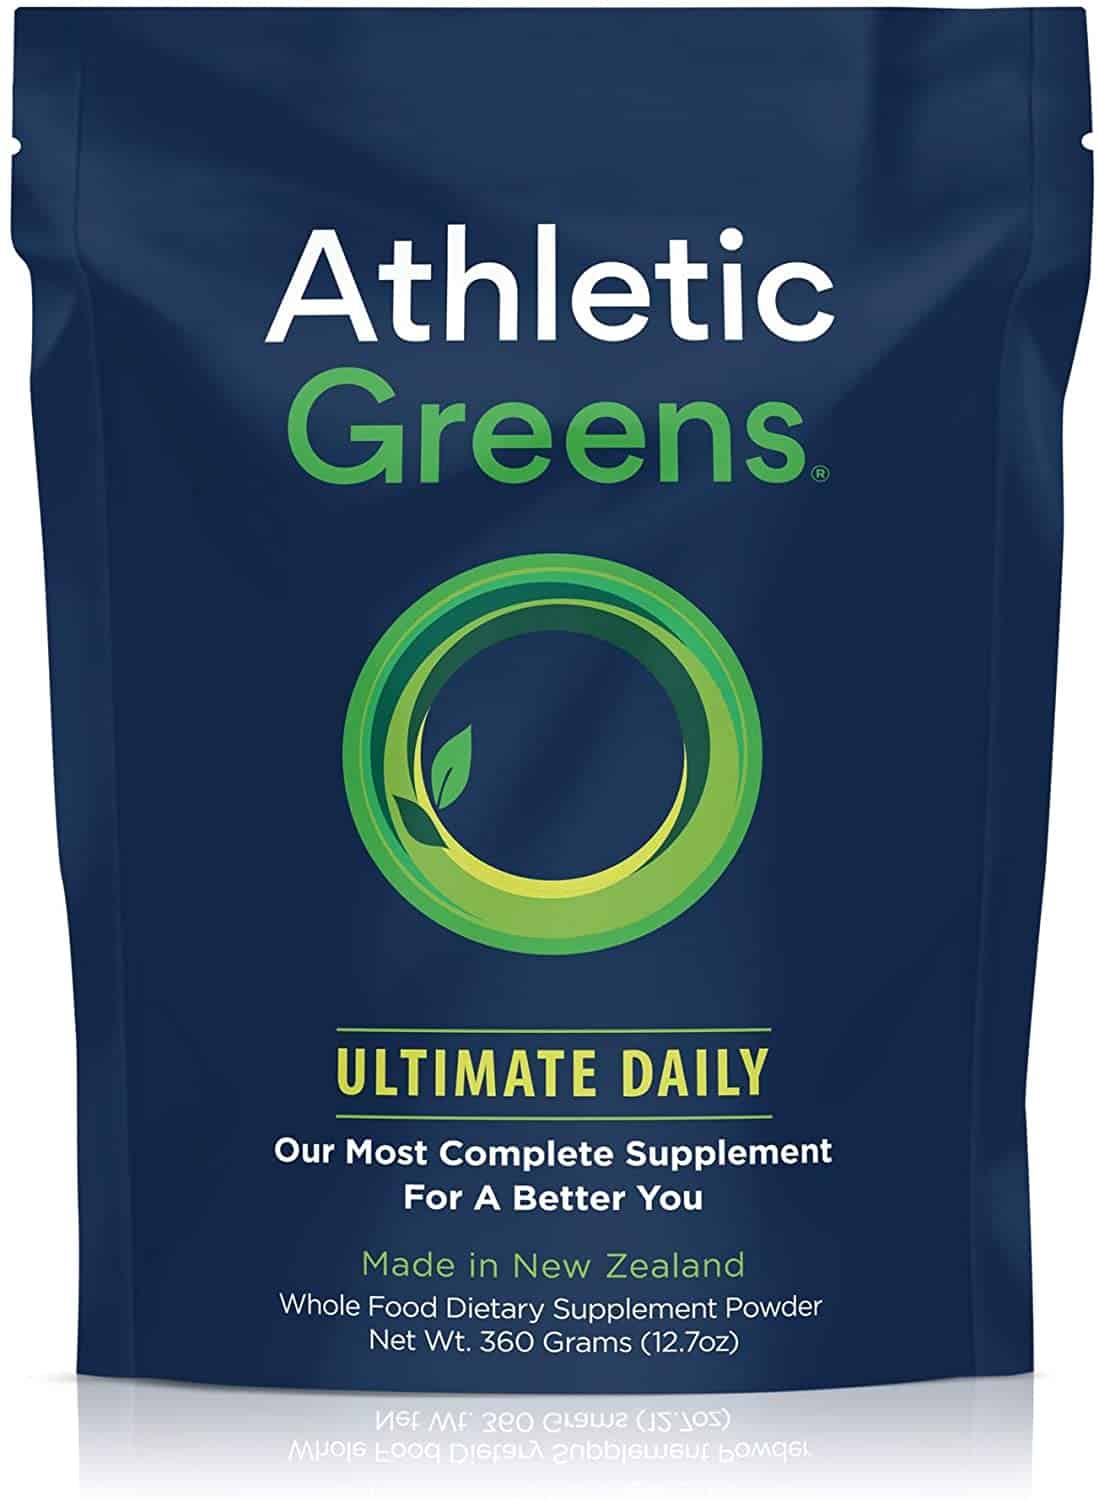 Athletic Greens bottle